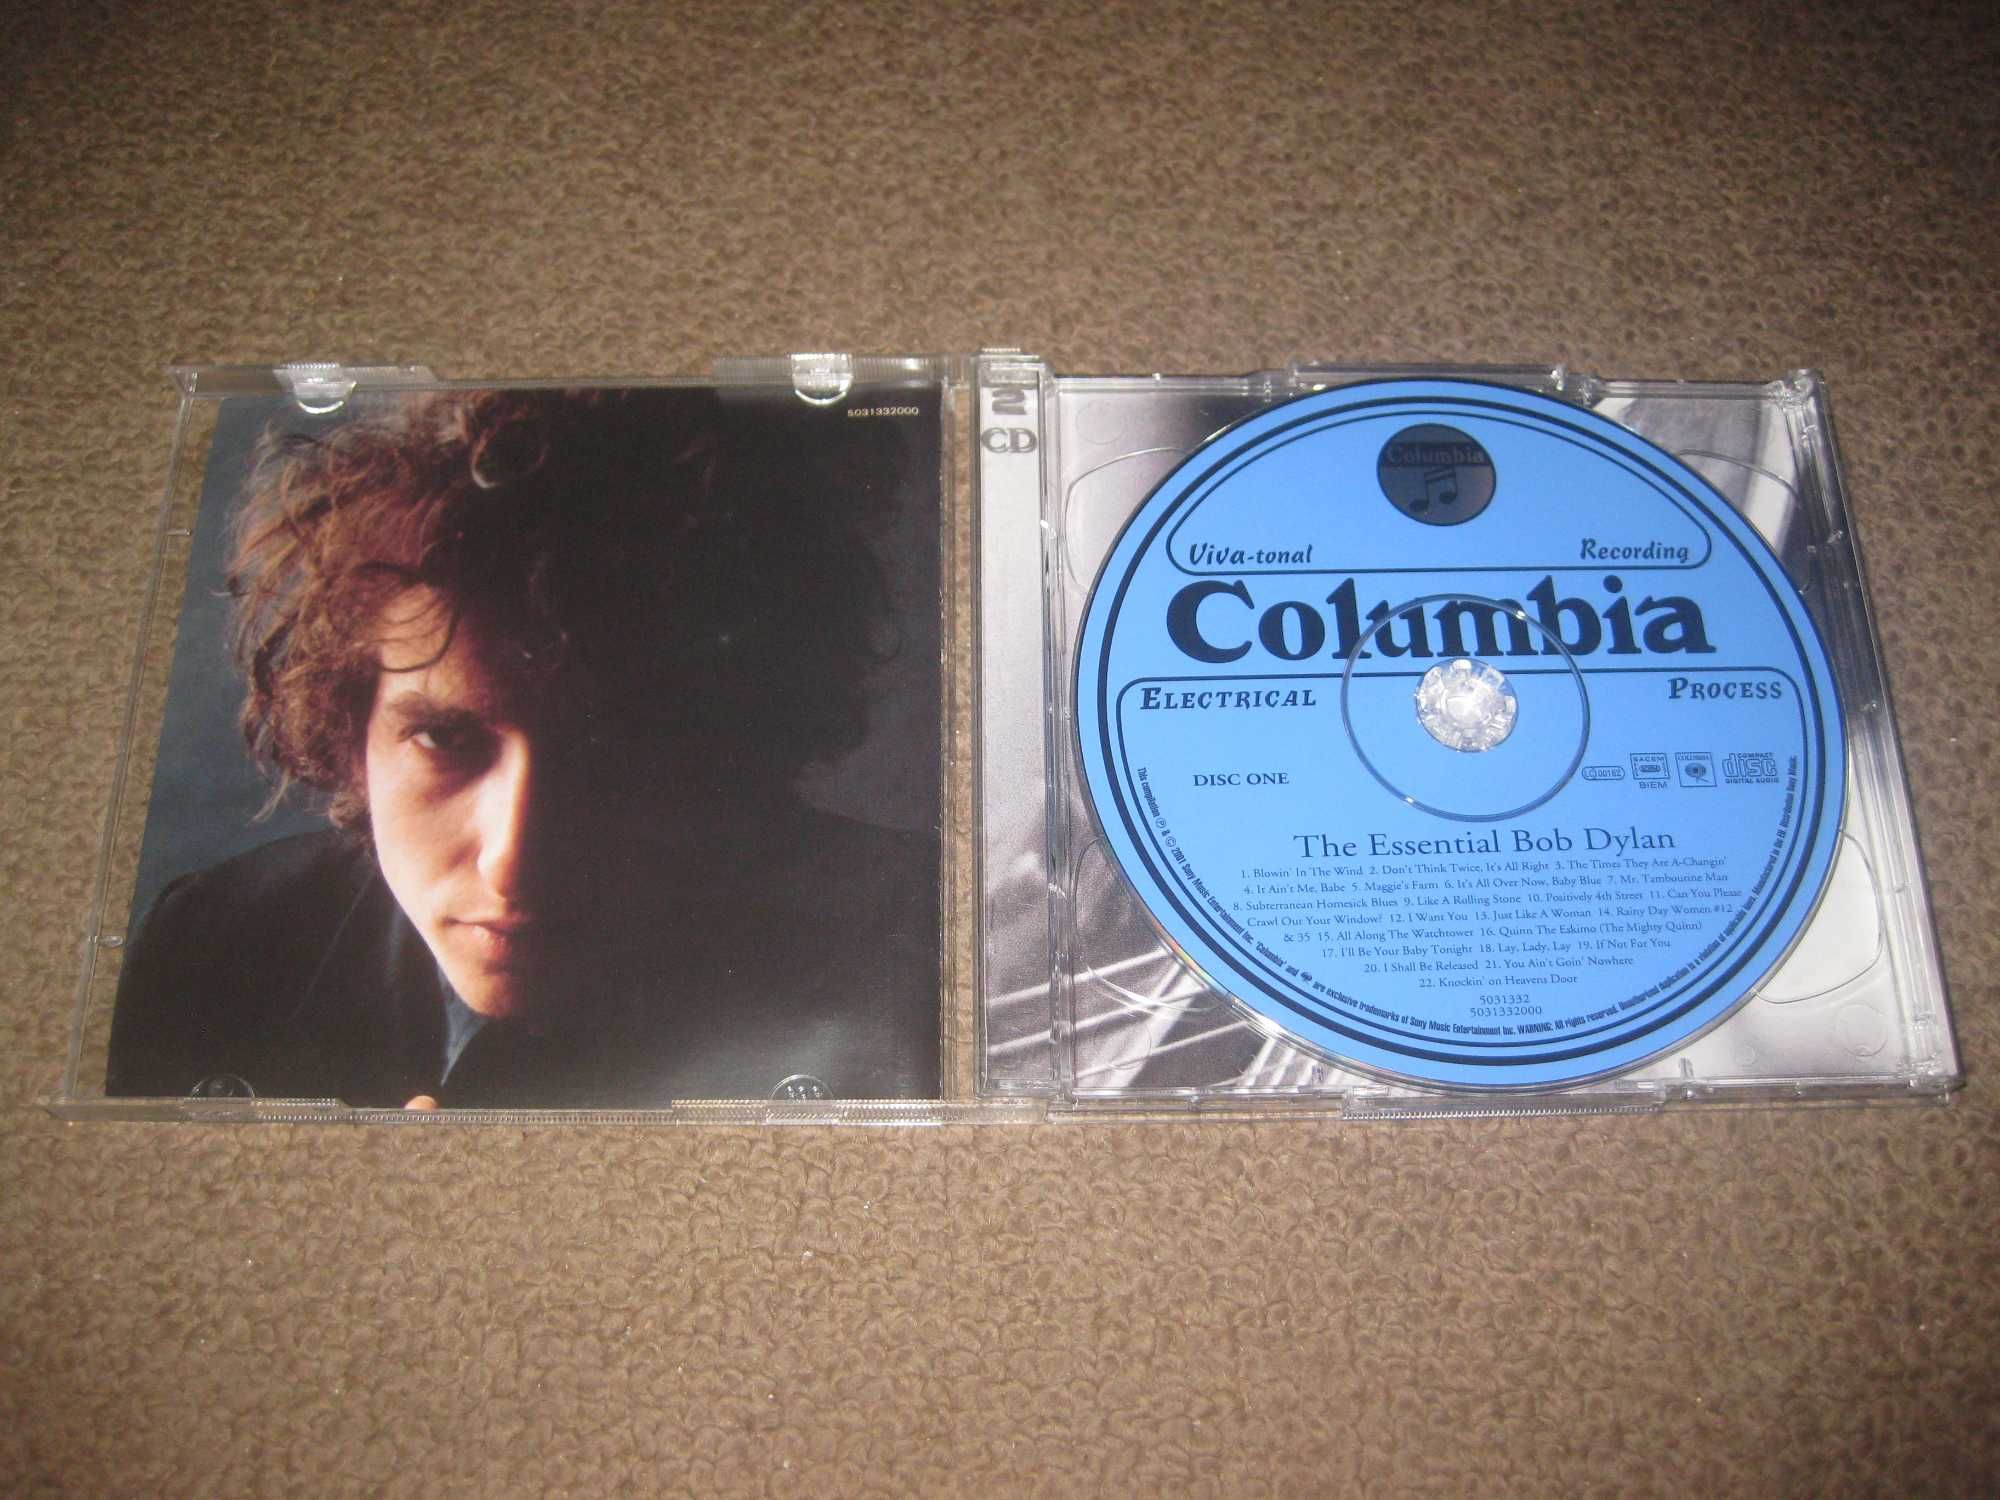 CD Duplo do Bob Dylan "The Essential Bob Dylan"